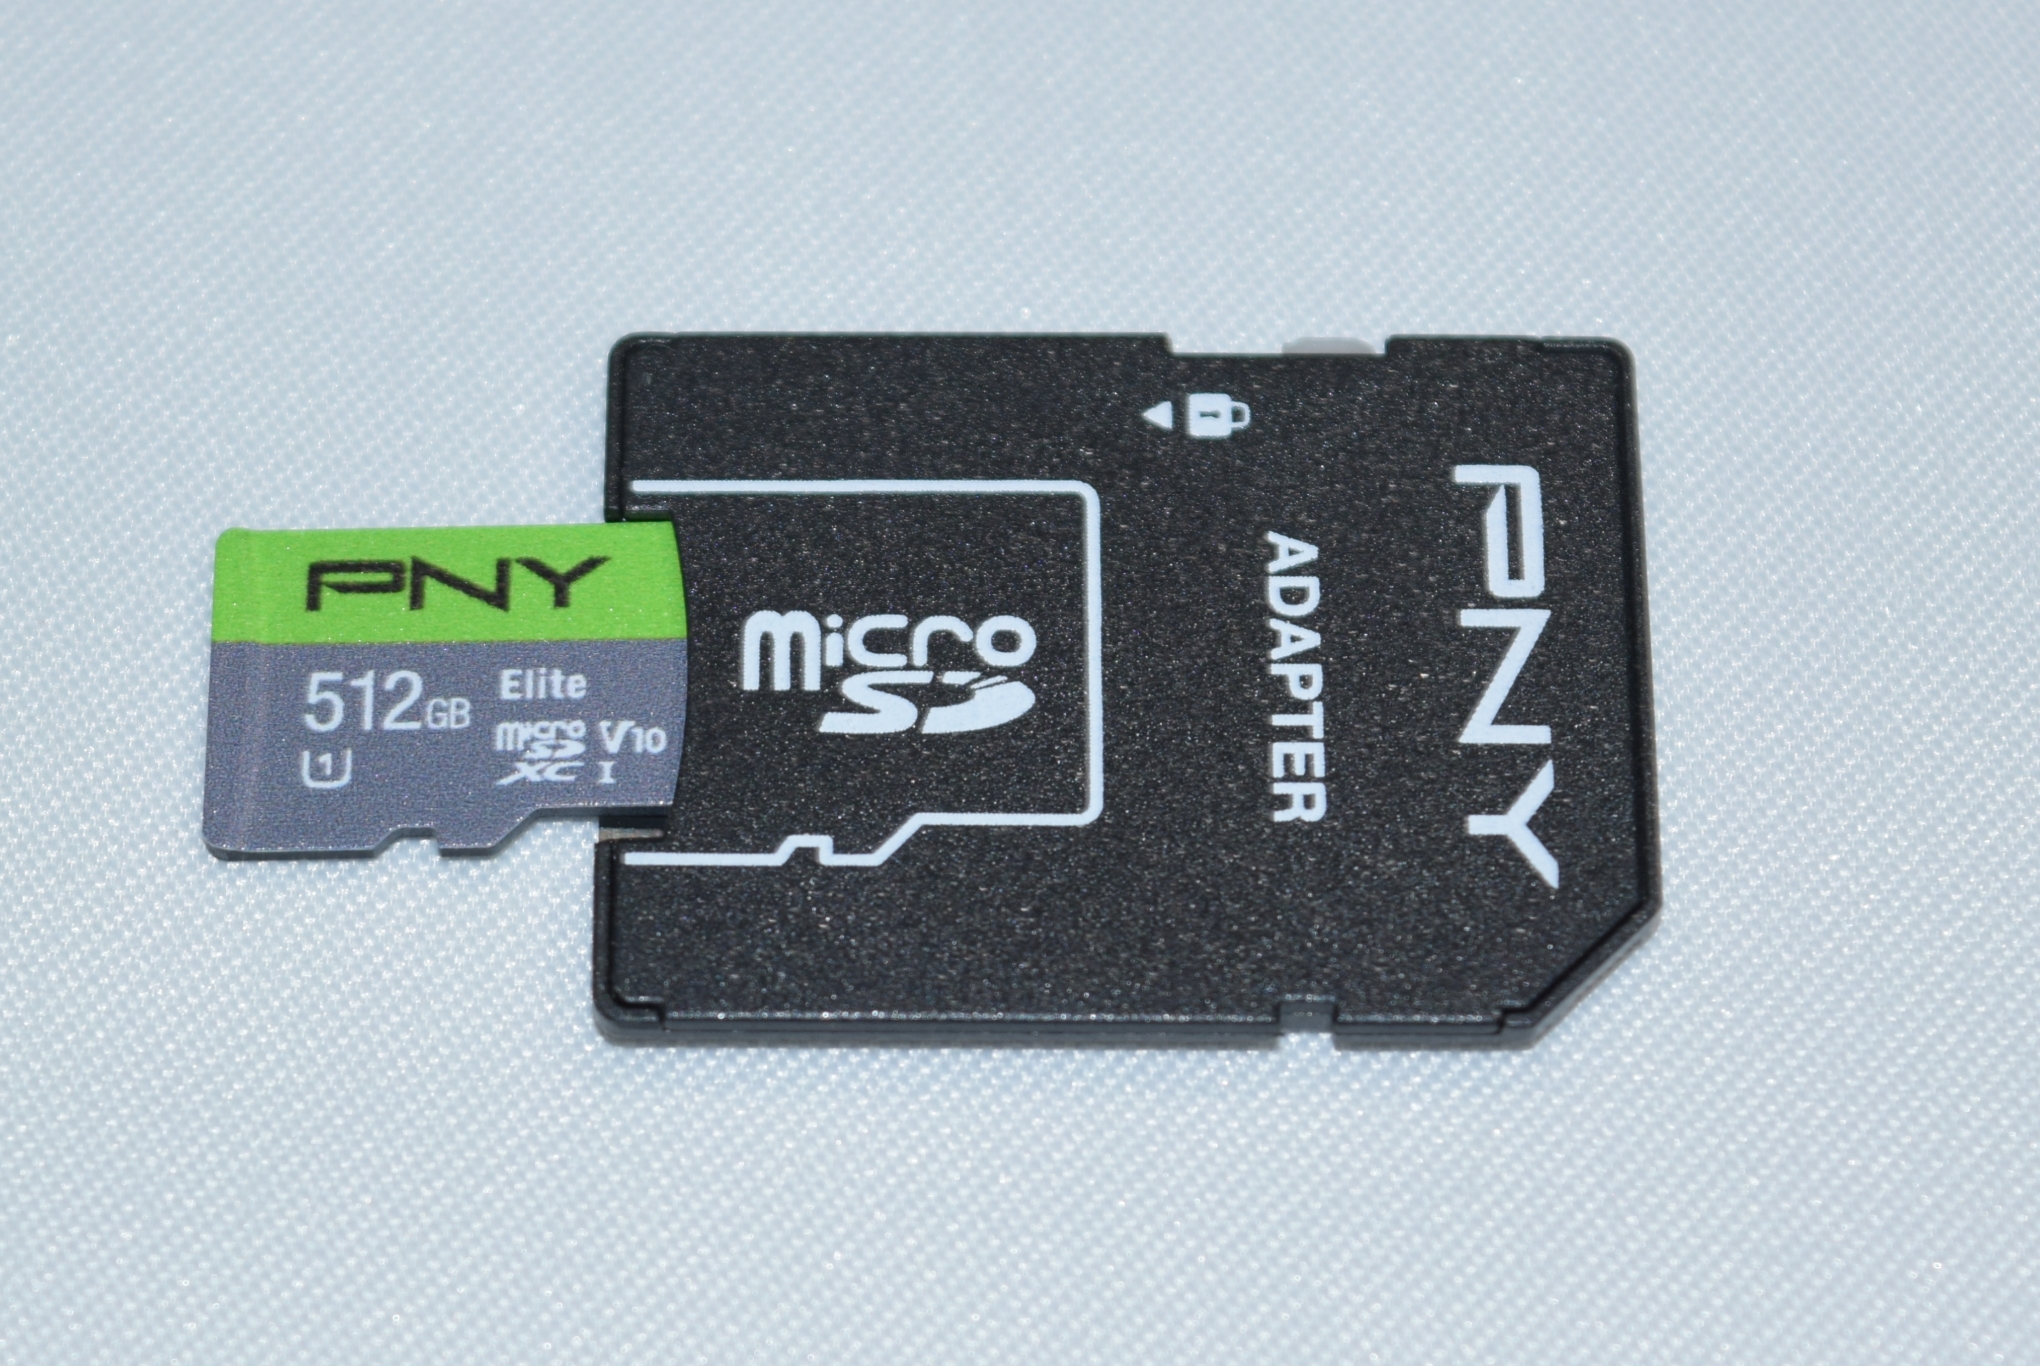  Benchmarks:PNY Micro Sleek 16GB